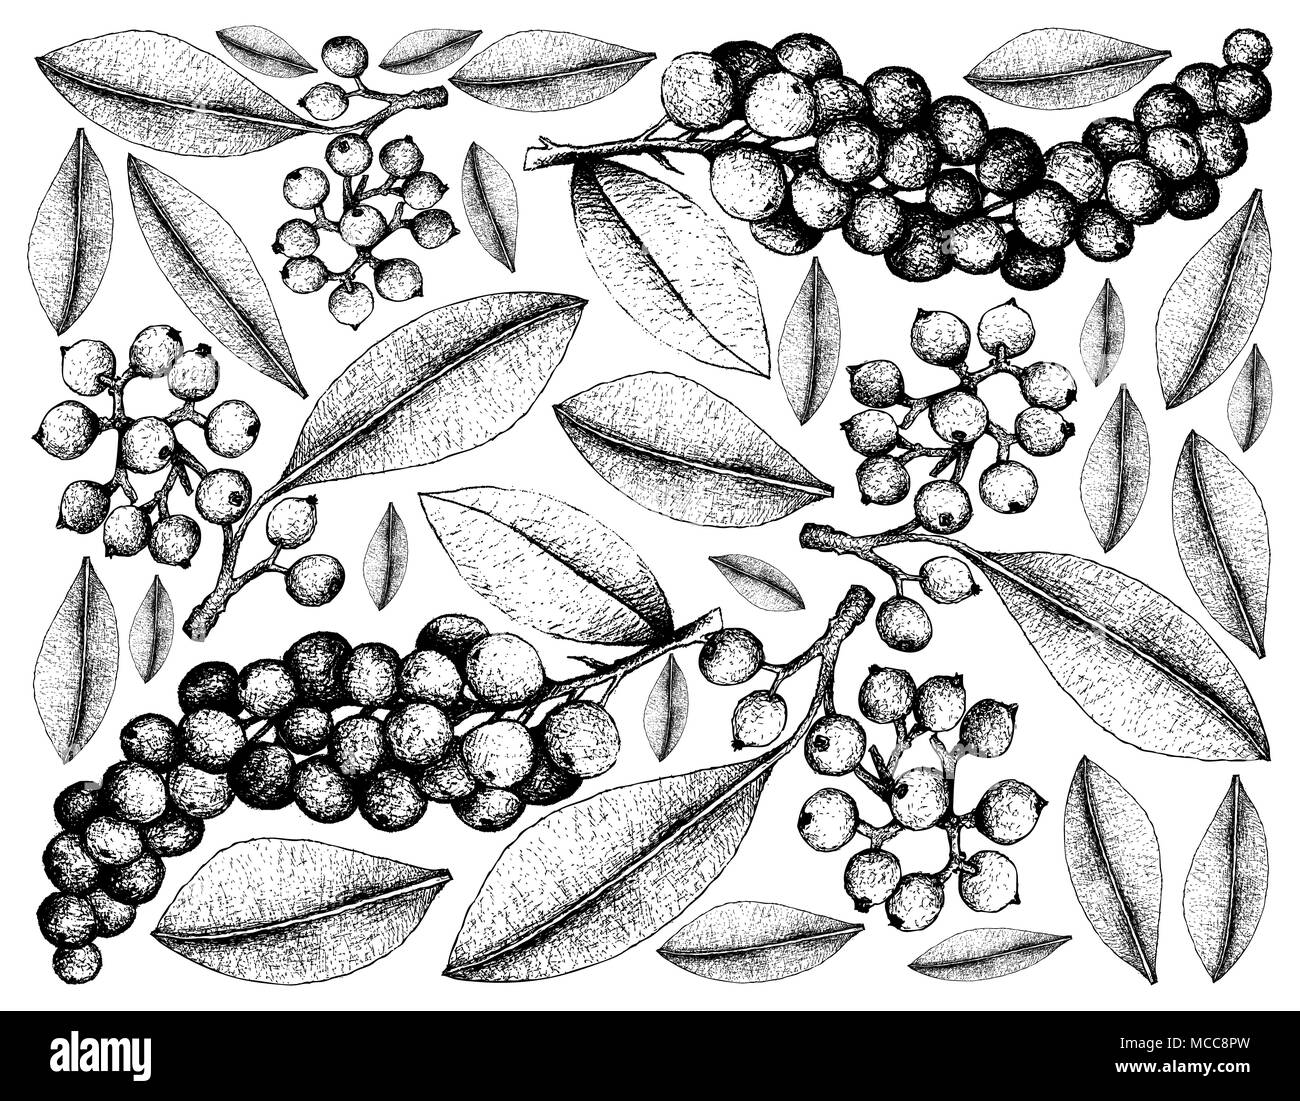 Berry Fruit, Illustration Wallpaper Background of Hand Drawn Sketch of Carallia Brachiata and Antidesma Thwaitesianum Fruits. Stock Photo